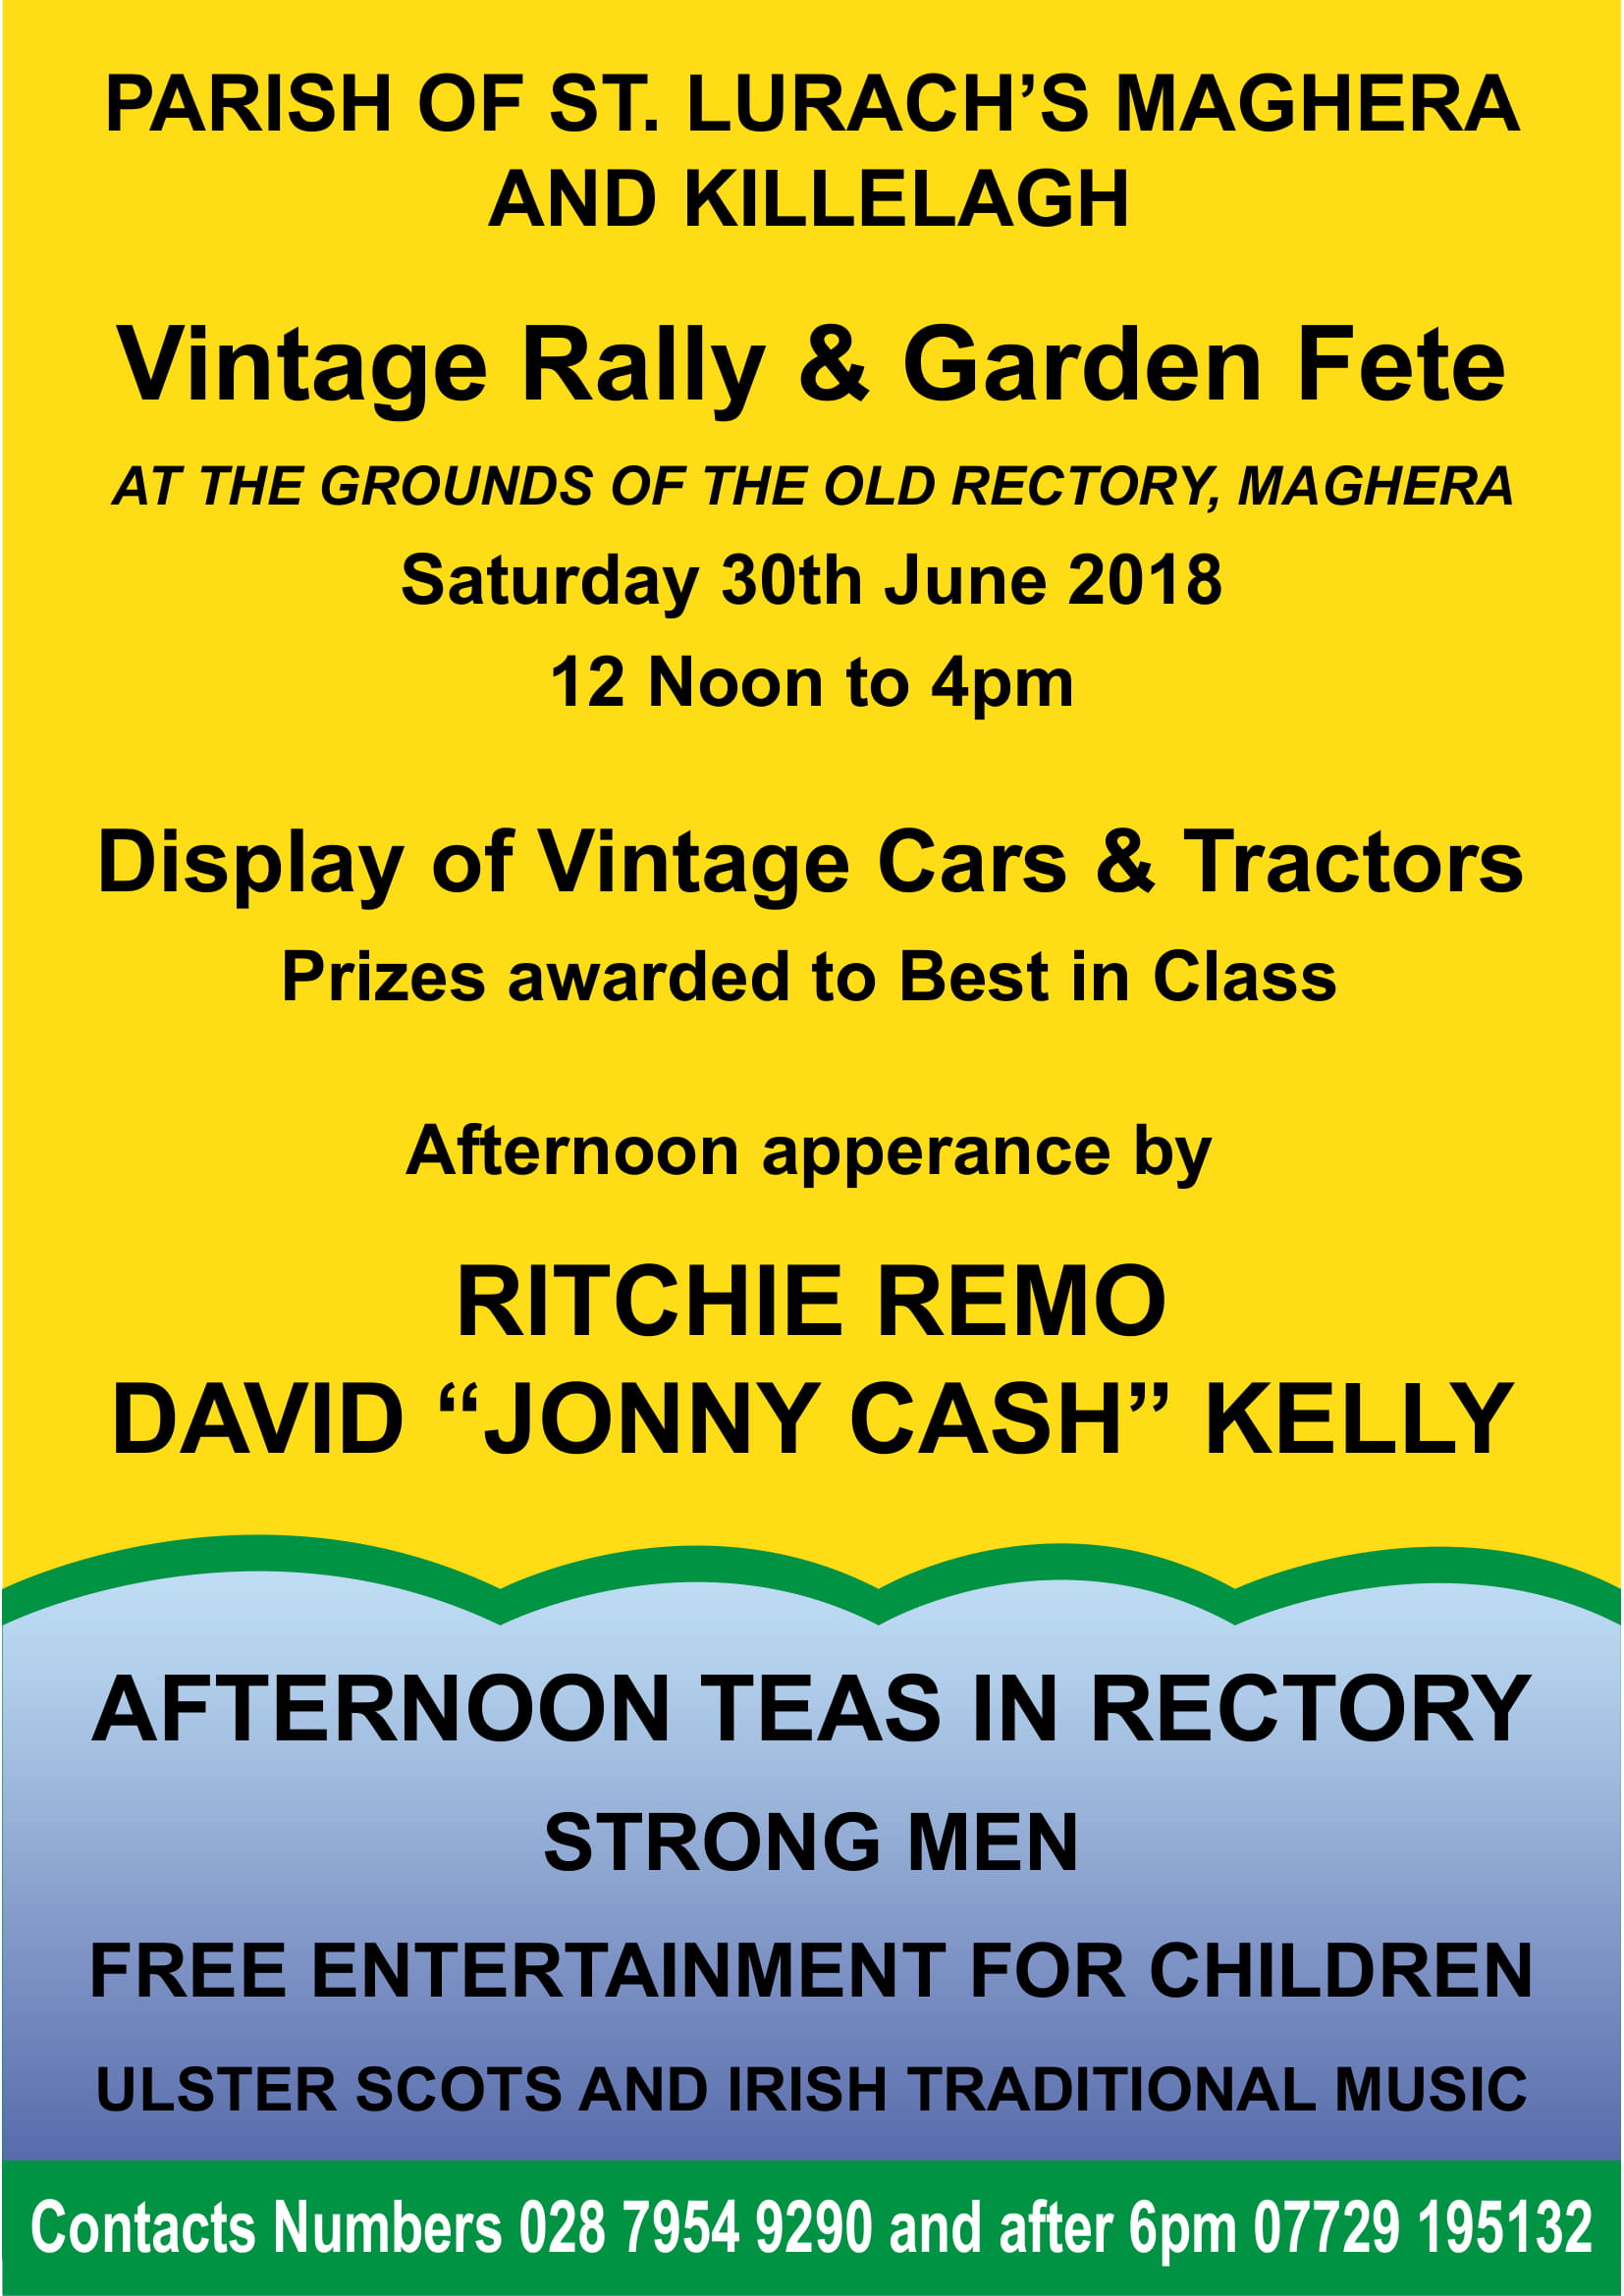 The Parish of St. Lurach's, Maghera & Killelagh Garden Fete & Vintage Rally